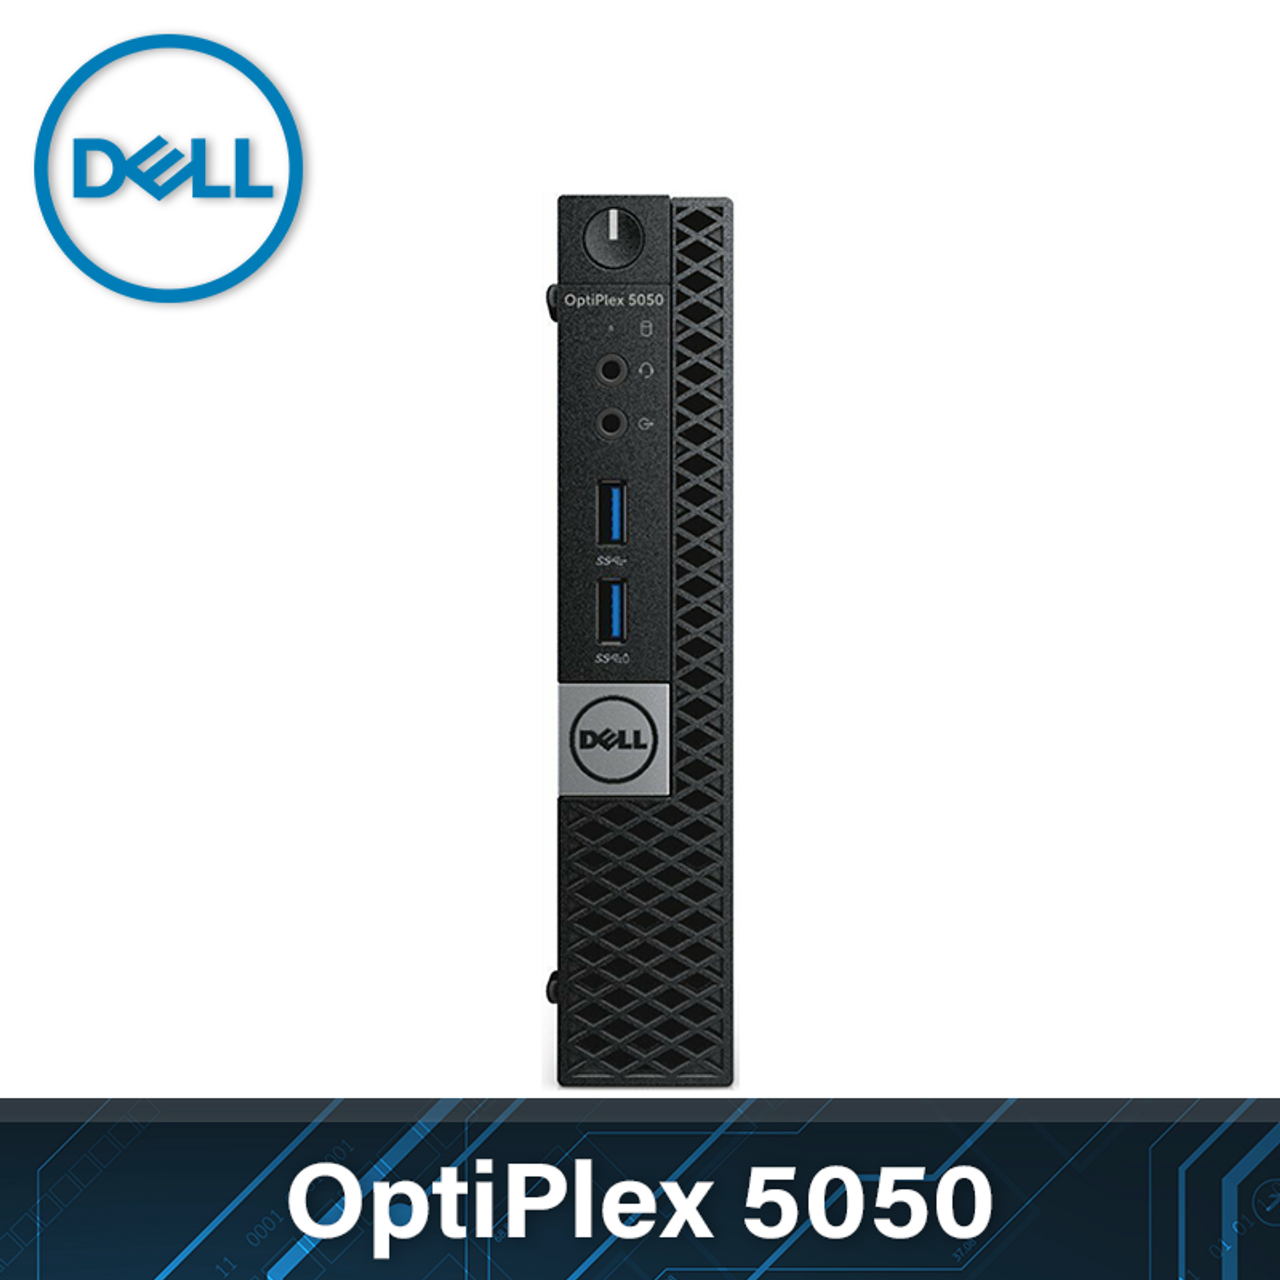 Dell OptiPlex 5050 Micro Workstation - Intel Core i3-7100T 3.4GHz 2 Core  Processor - 8GB (2x 4GB) DDR4-2400 - 128GB SSD - Intel HD Graphics 630 -  WiFi ...